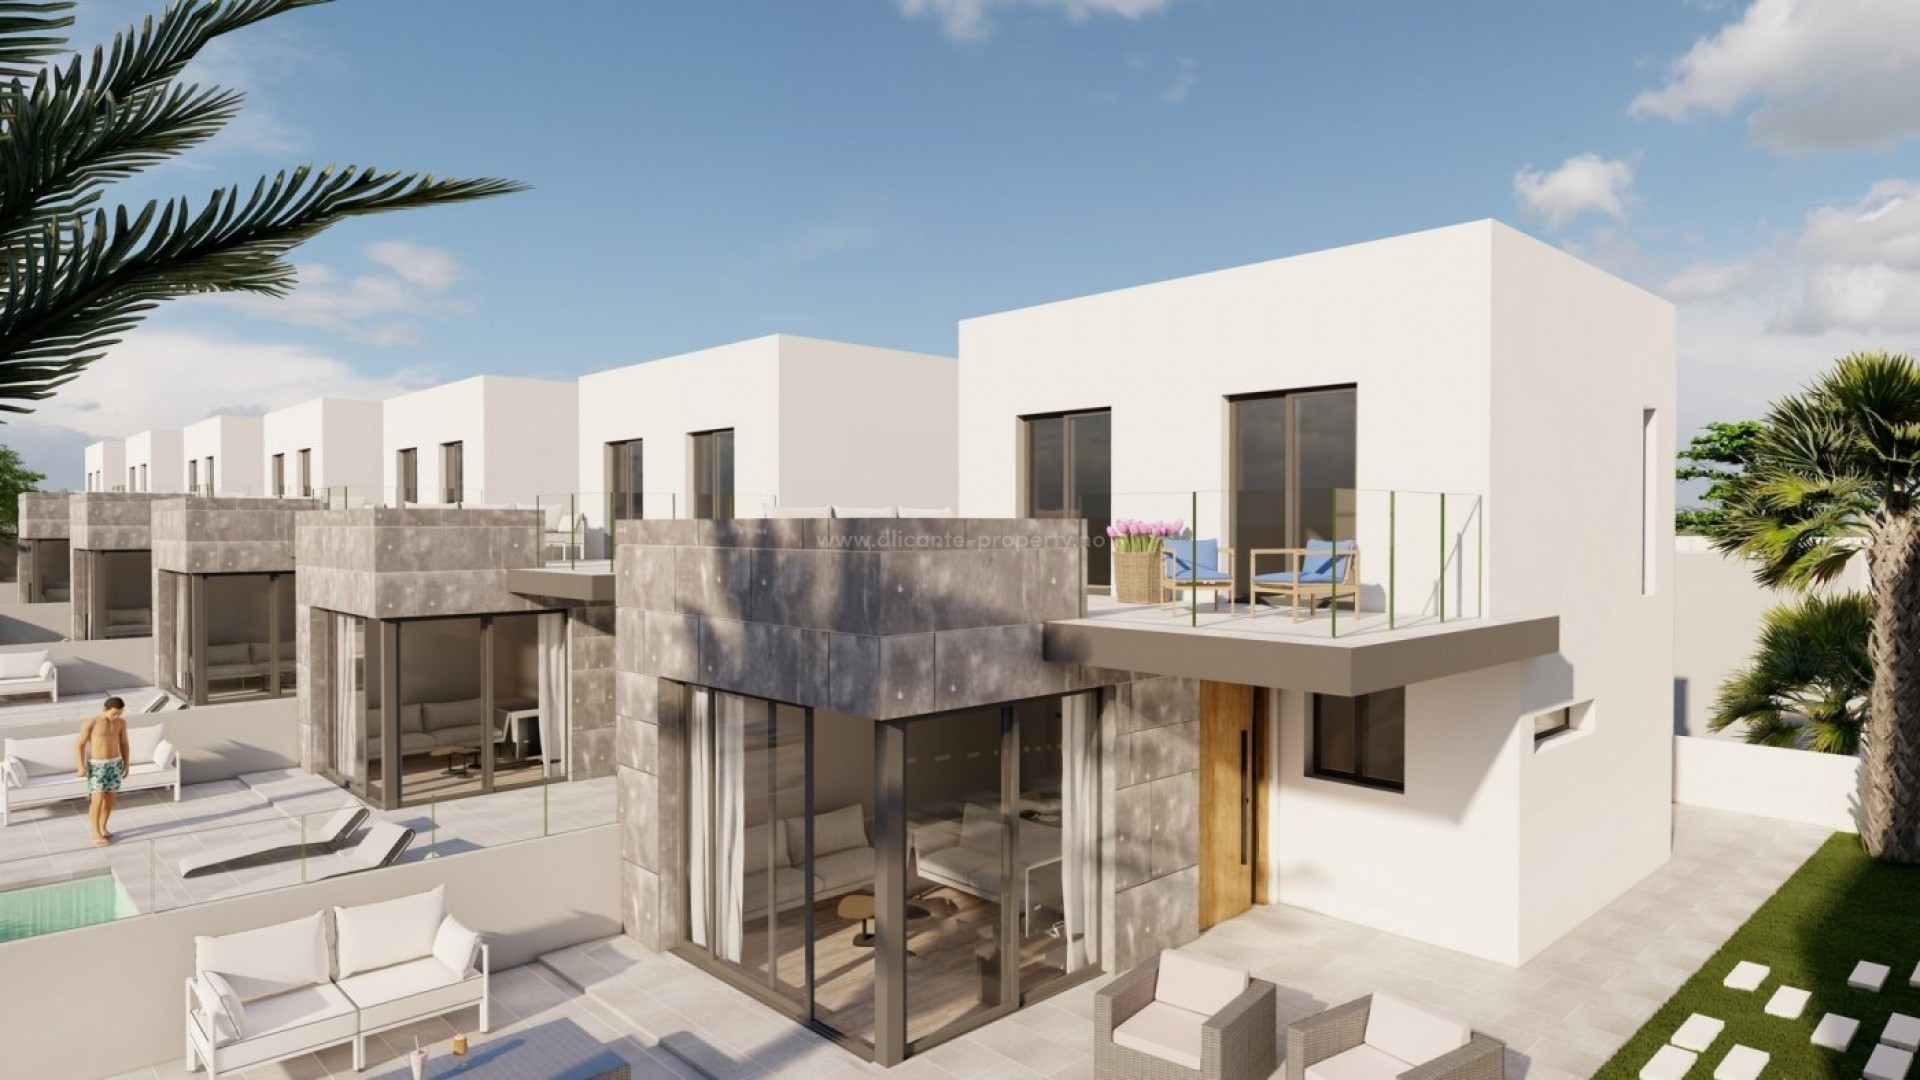 Brand new houses/villas in Los Altos de Torrevieja, 3 bedrooms (one with walk-in wardrobe), 2 bathrooms, guest toilet, pool, large terrace and solarium